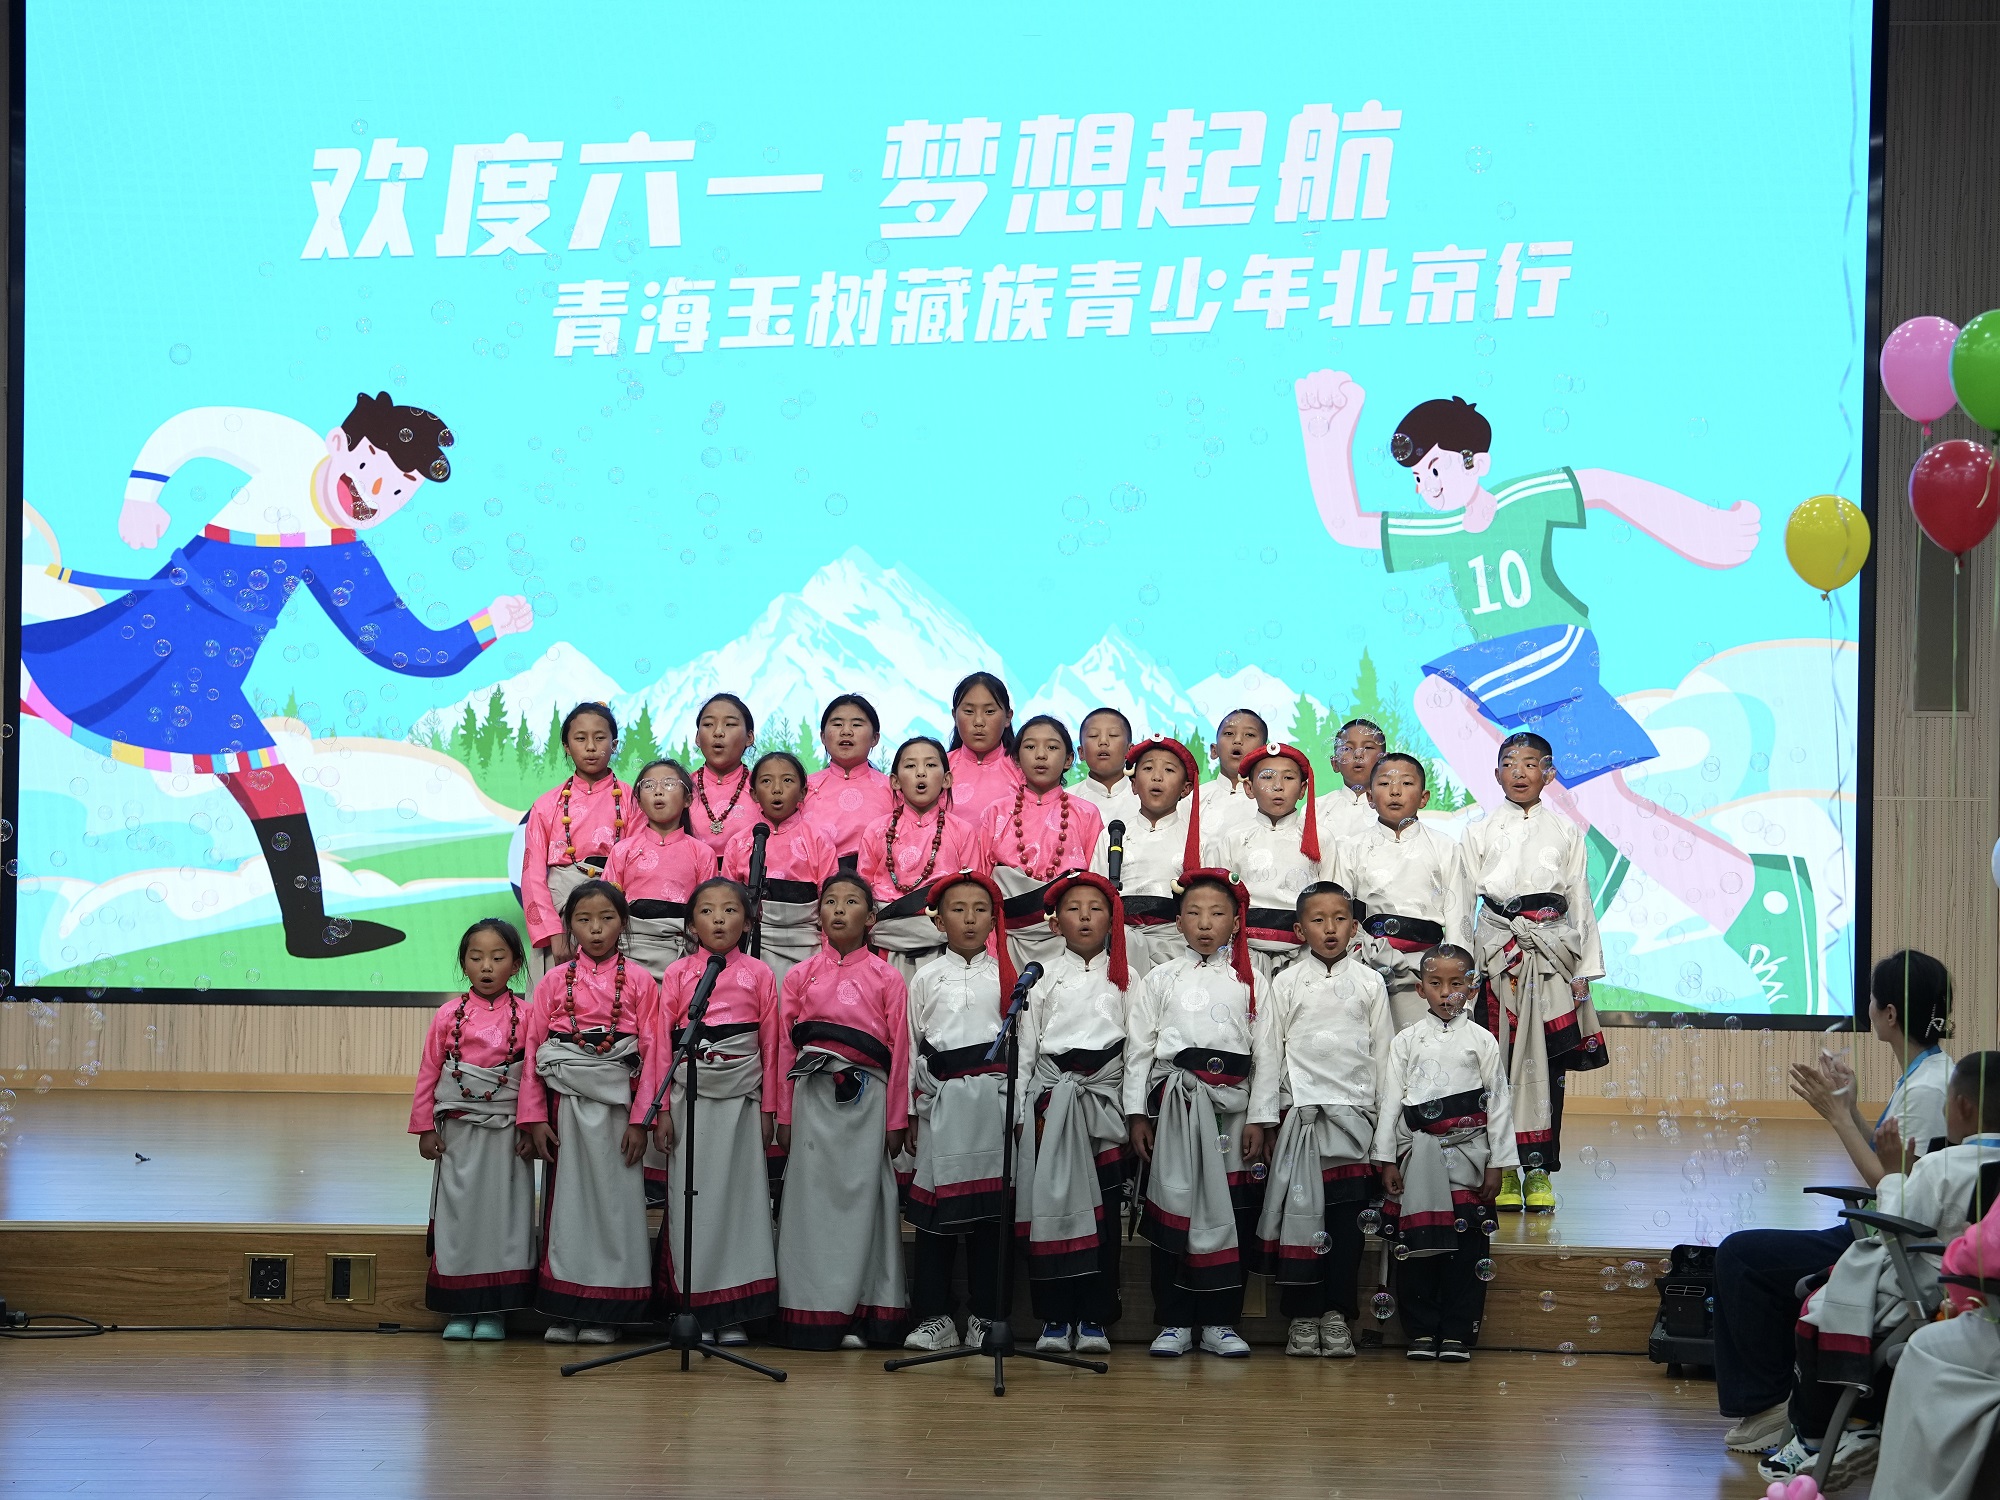 40 Tibetan and Beijing teenagers celebrated International Children